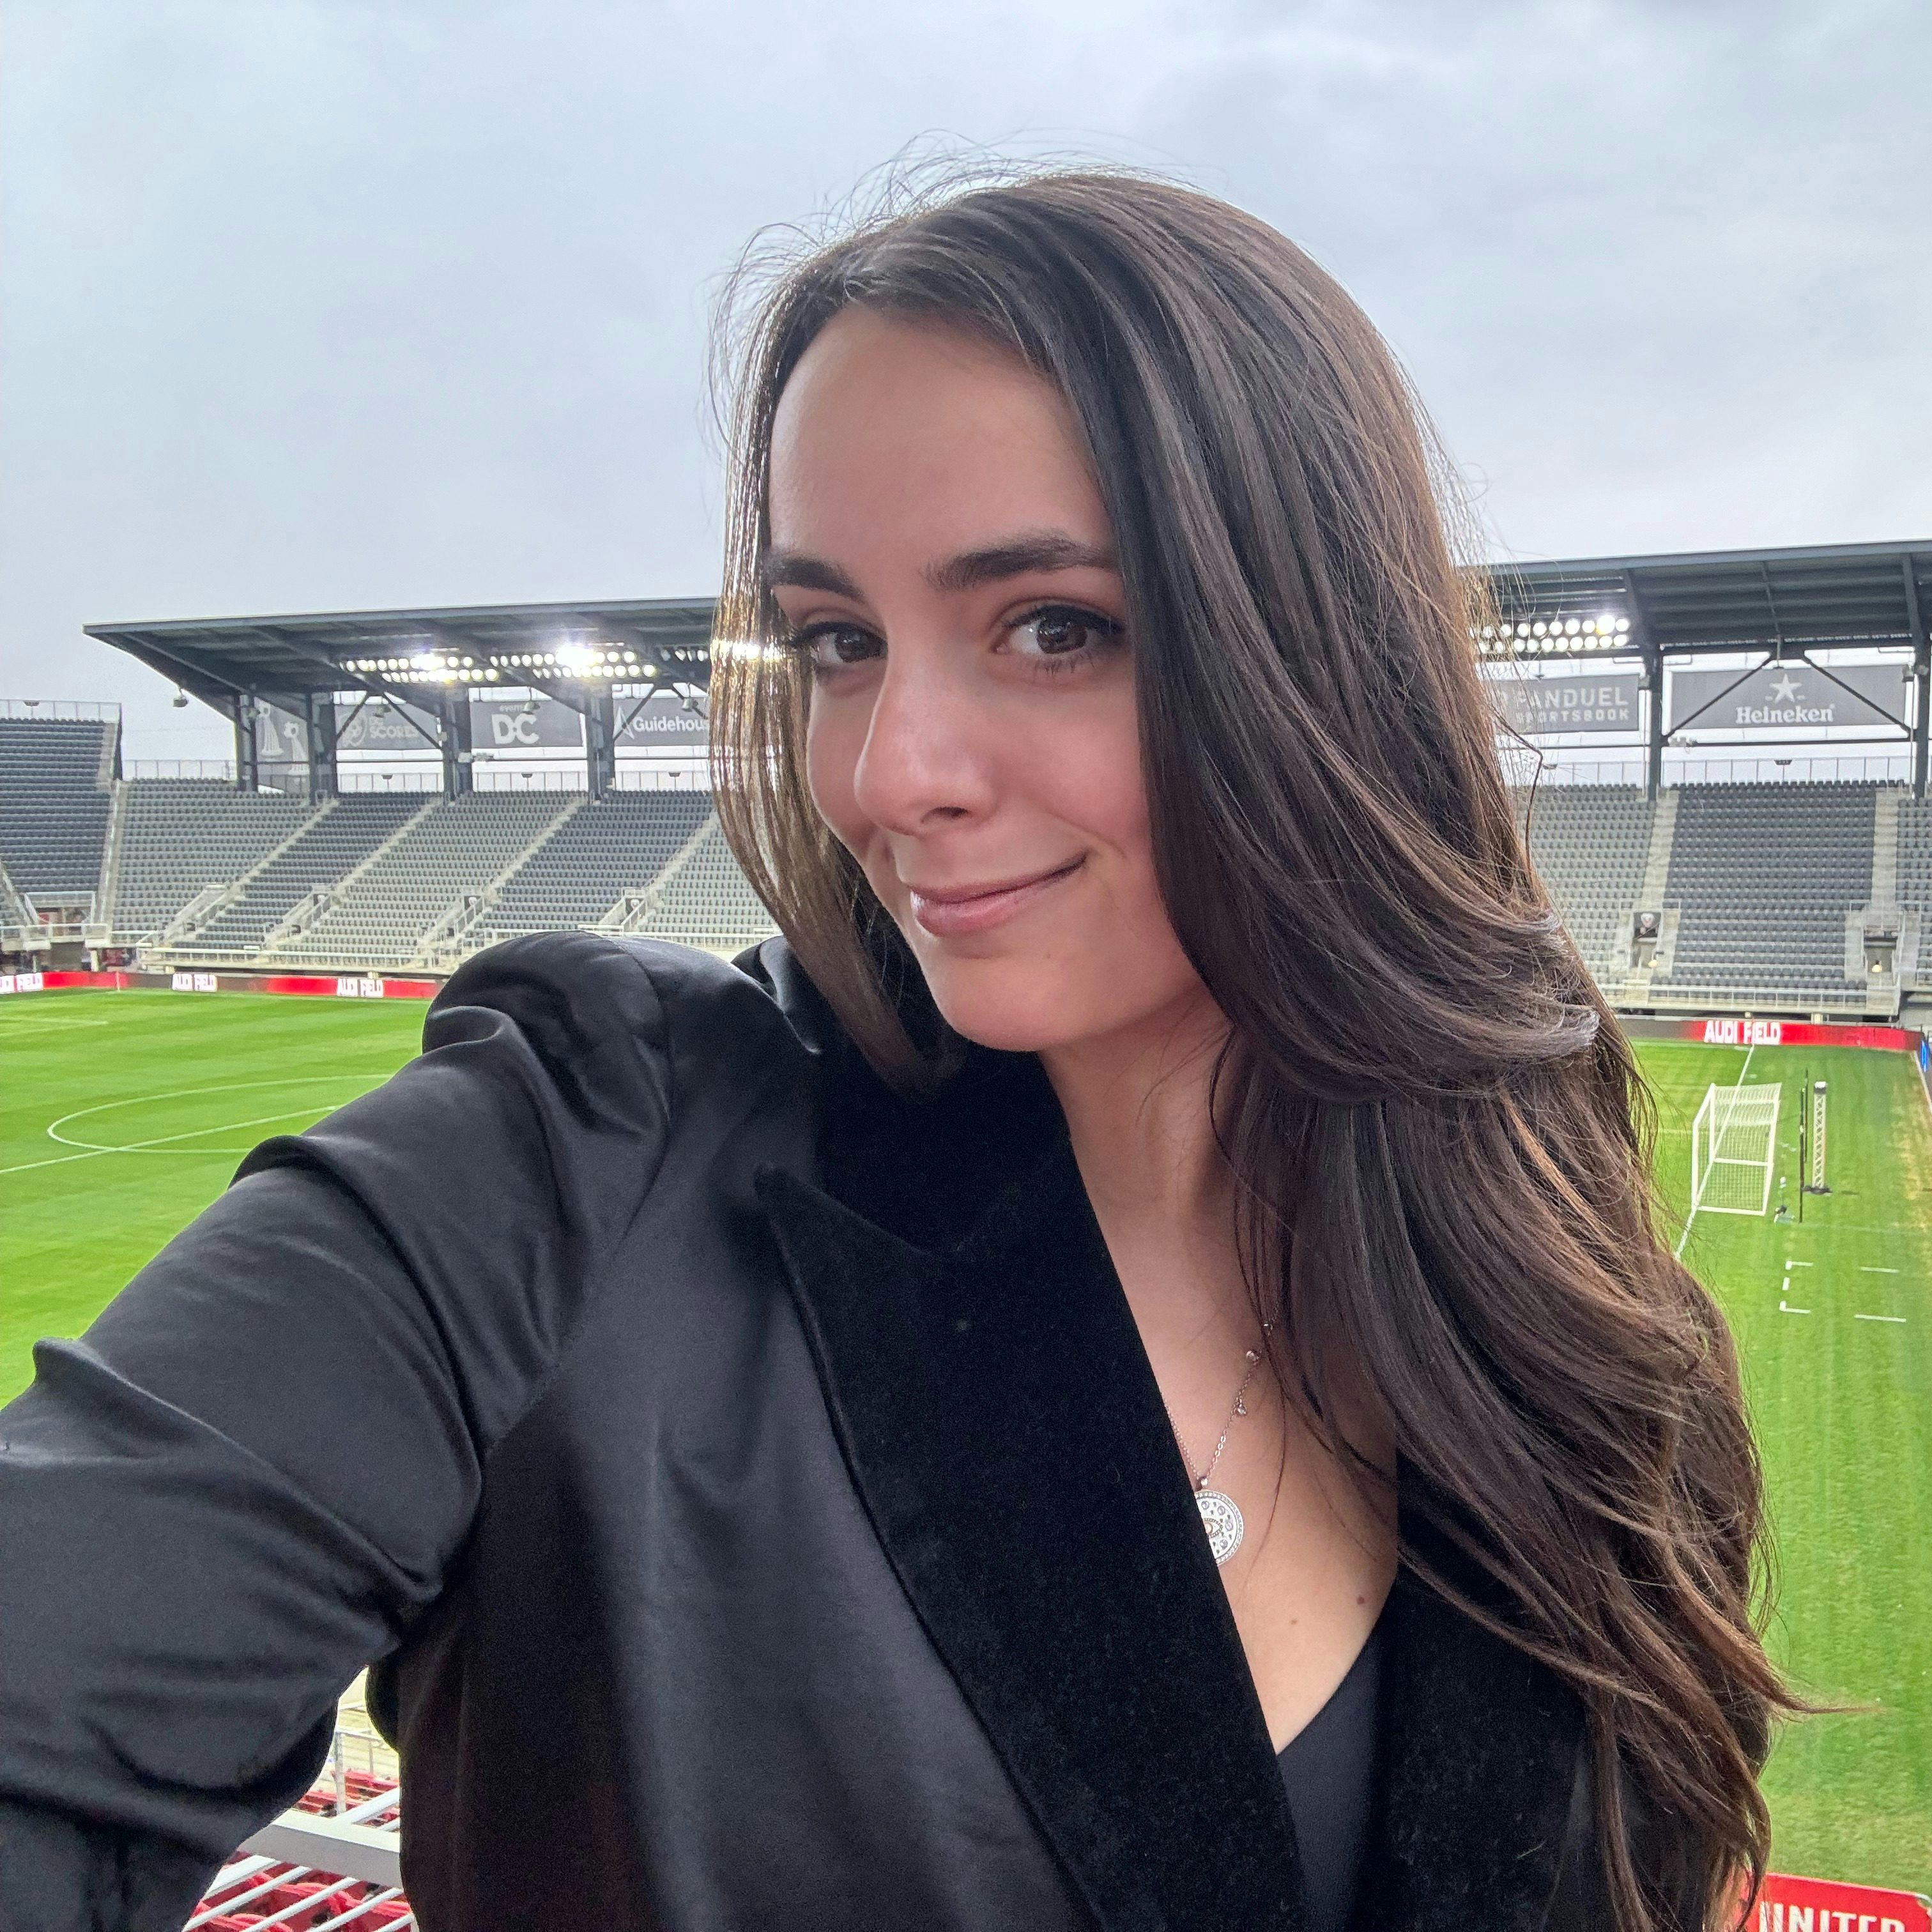 Travel advisor Giovanna Saulle posing for a photo on a sports field